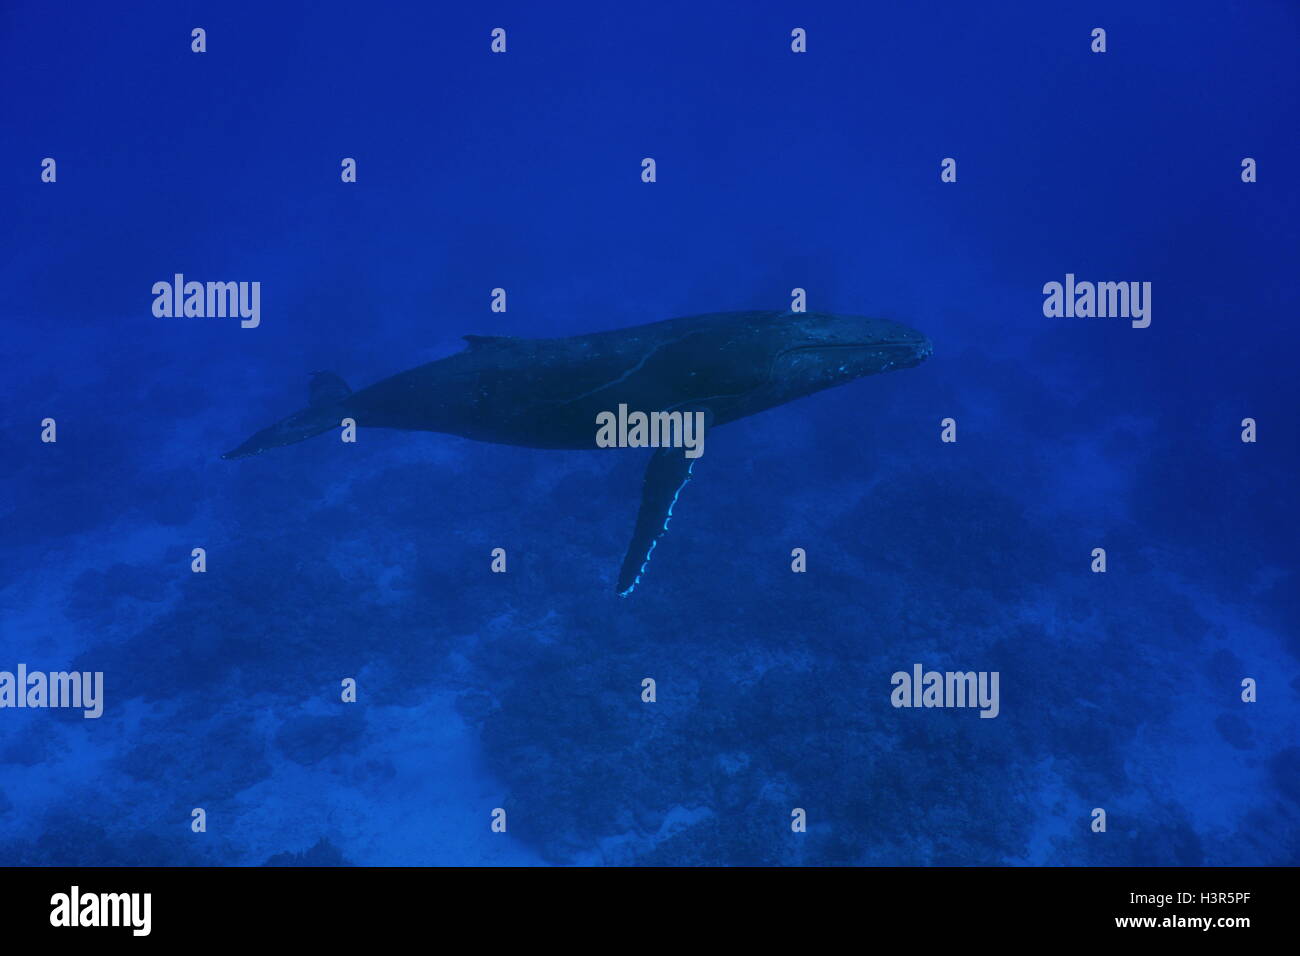 Una ballena jorobada, Megaptera novaeangliae, submarino en el océano Pacífico, la isla de Rurutu, austral archipiélago, Polinesia Francesa Foto de stock